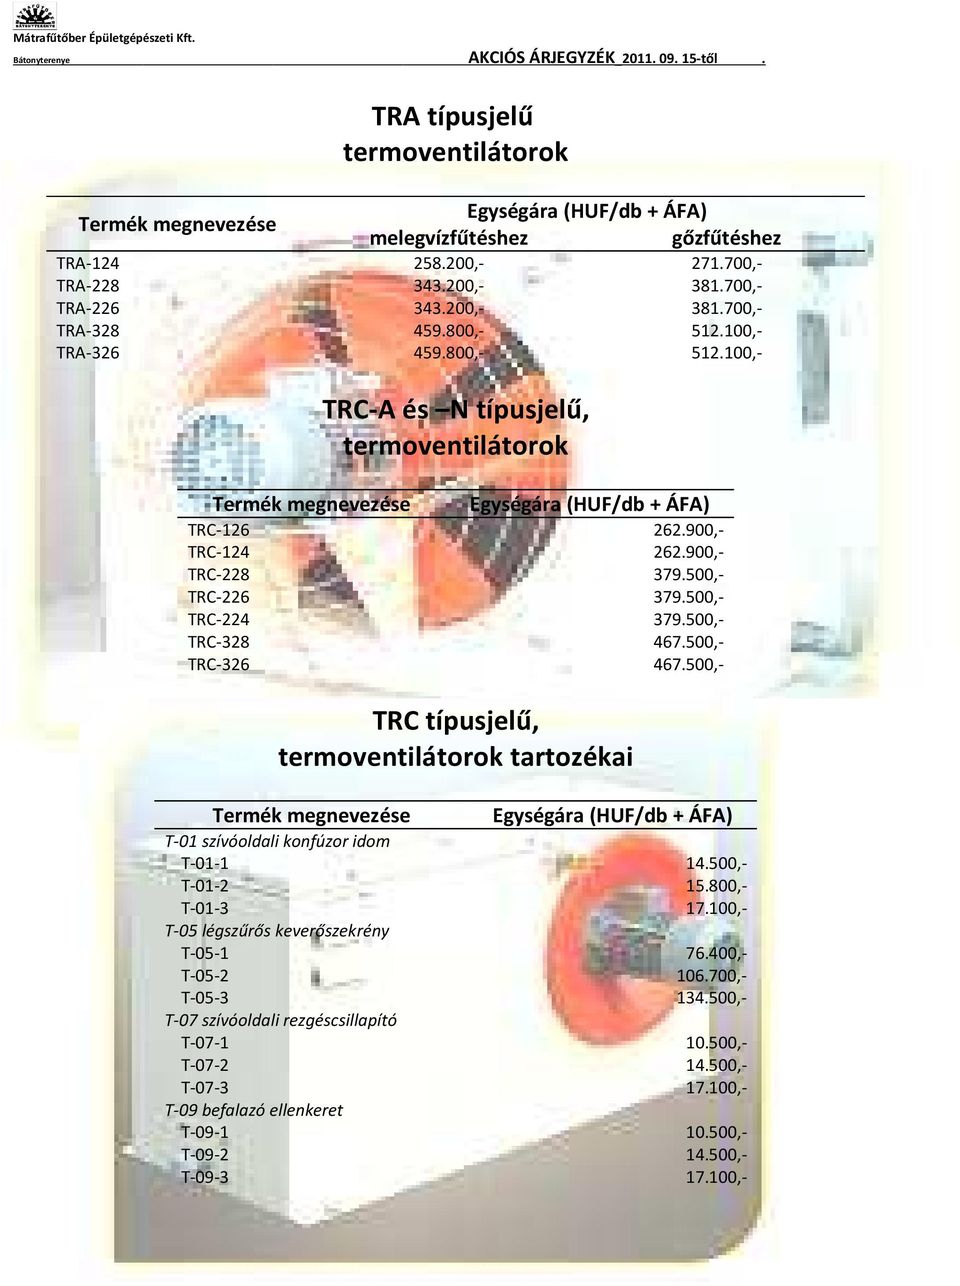 500,- TRC-326 467.500,- TRC típusjelű, termoventilátorok tartozékai T-01 szívóoldali konfúzor idom T-01-1 14.500,- T-01-2 15.800,- T-01-3 17.